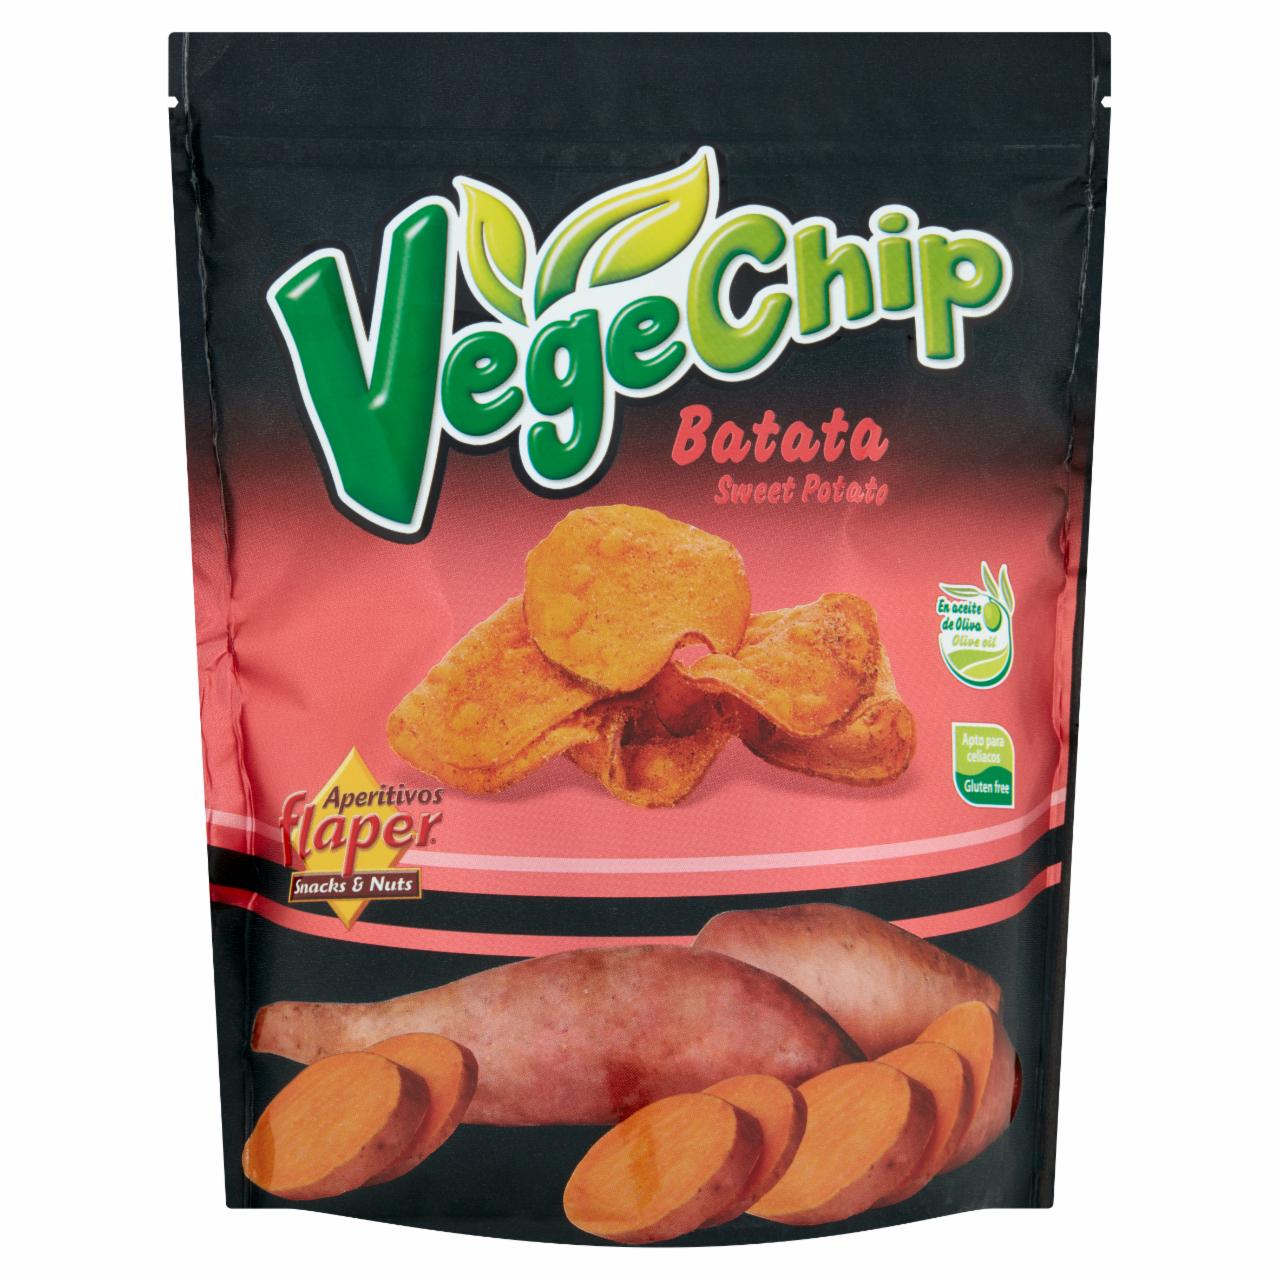 Képek - Vege Chip Batata édesburgonya chips 70 g